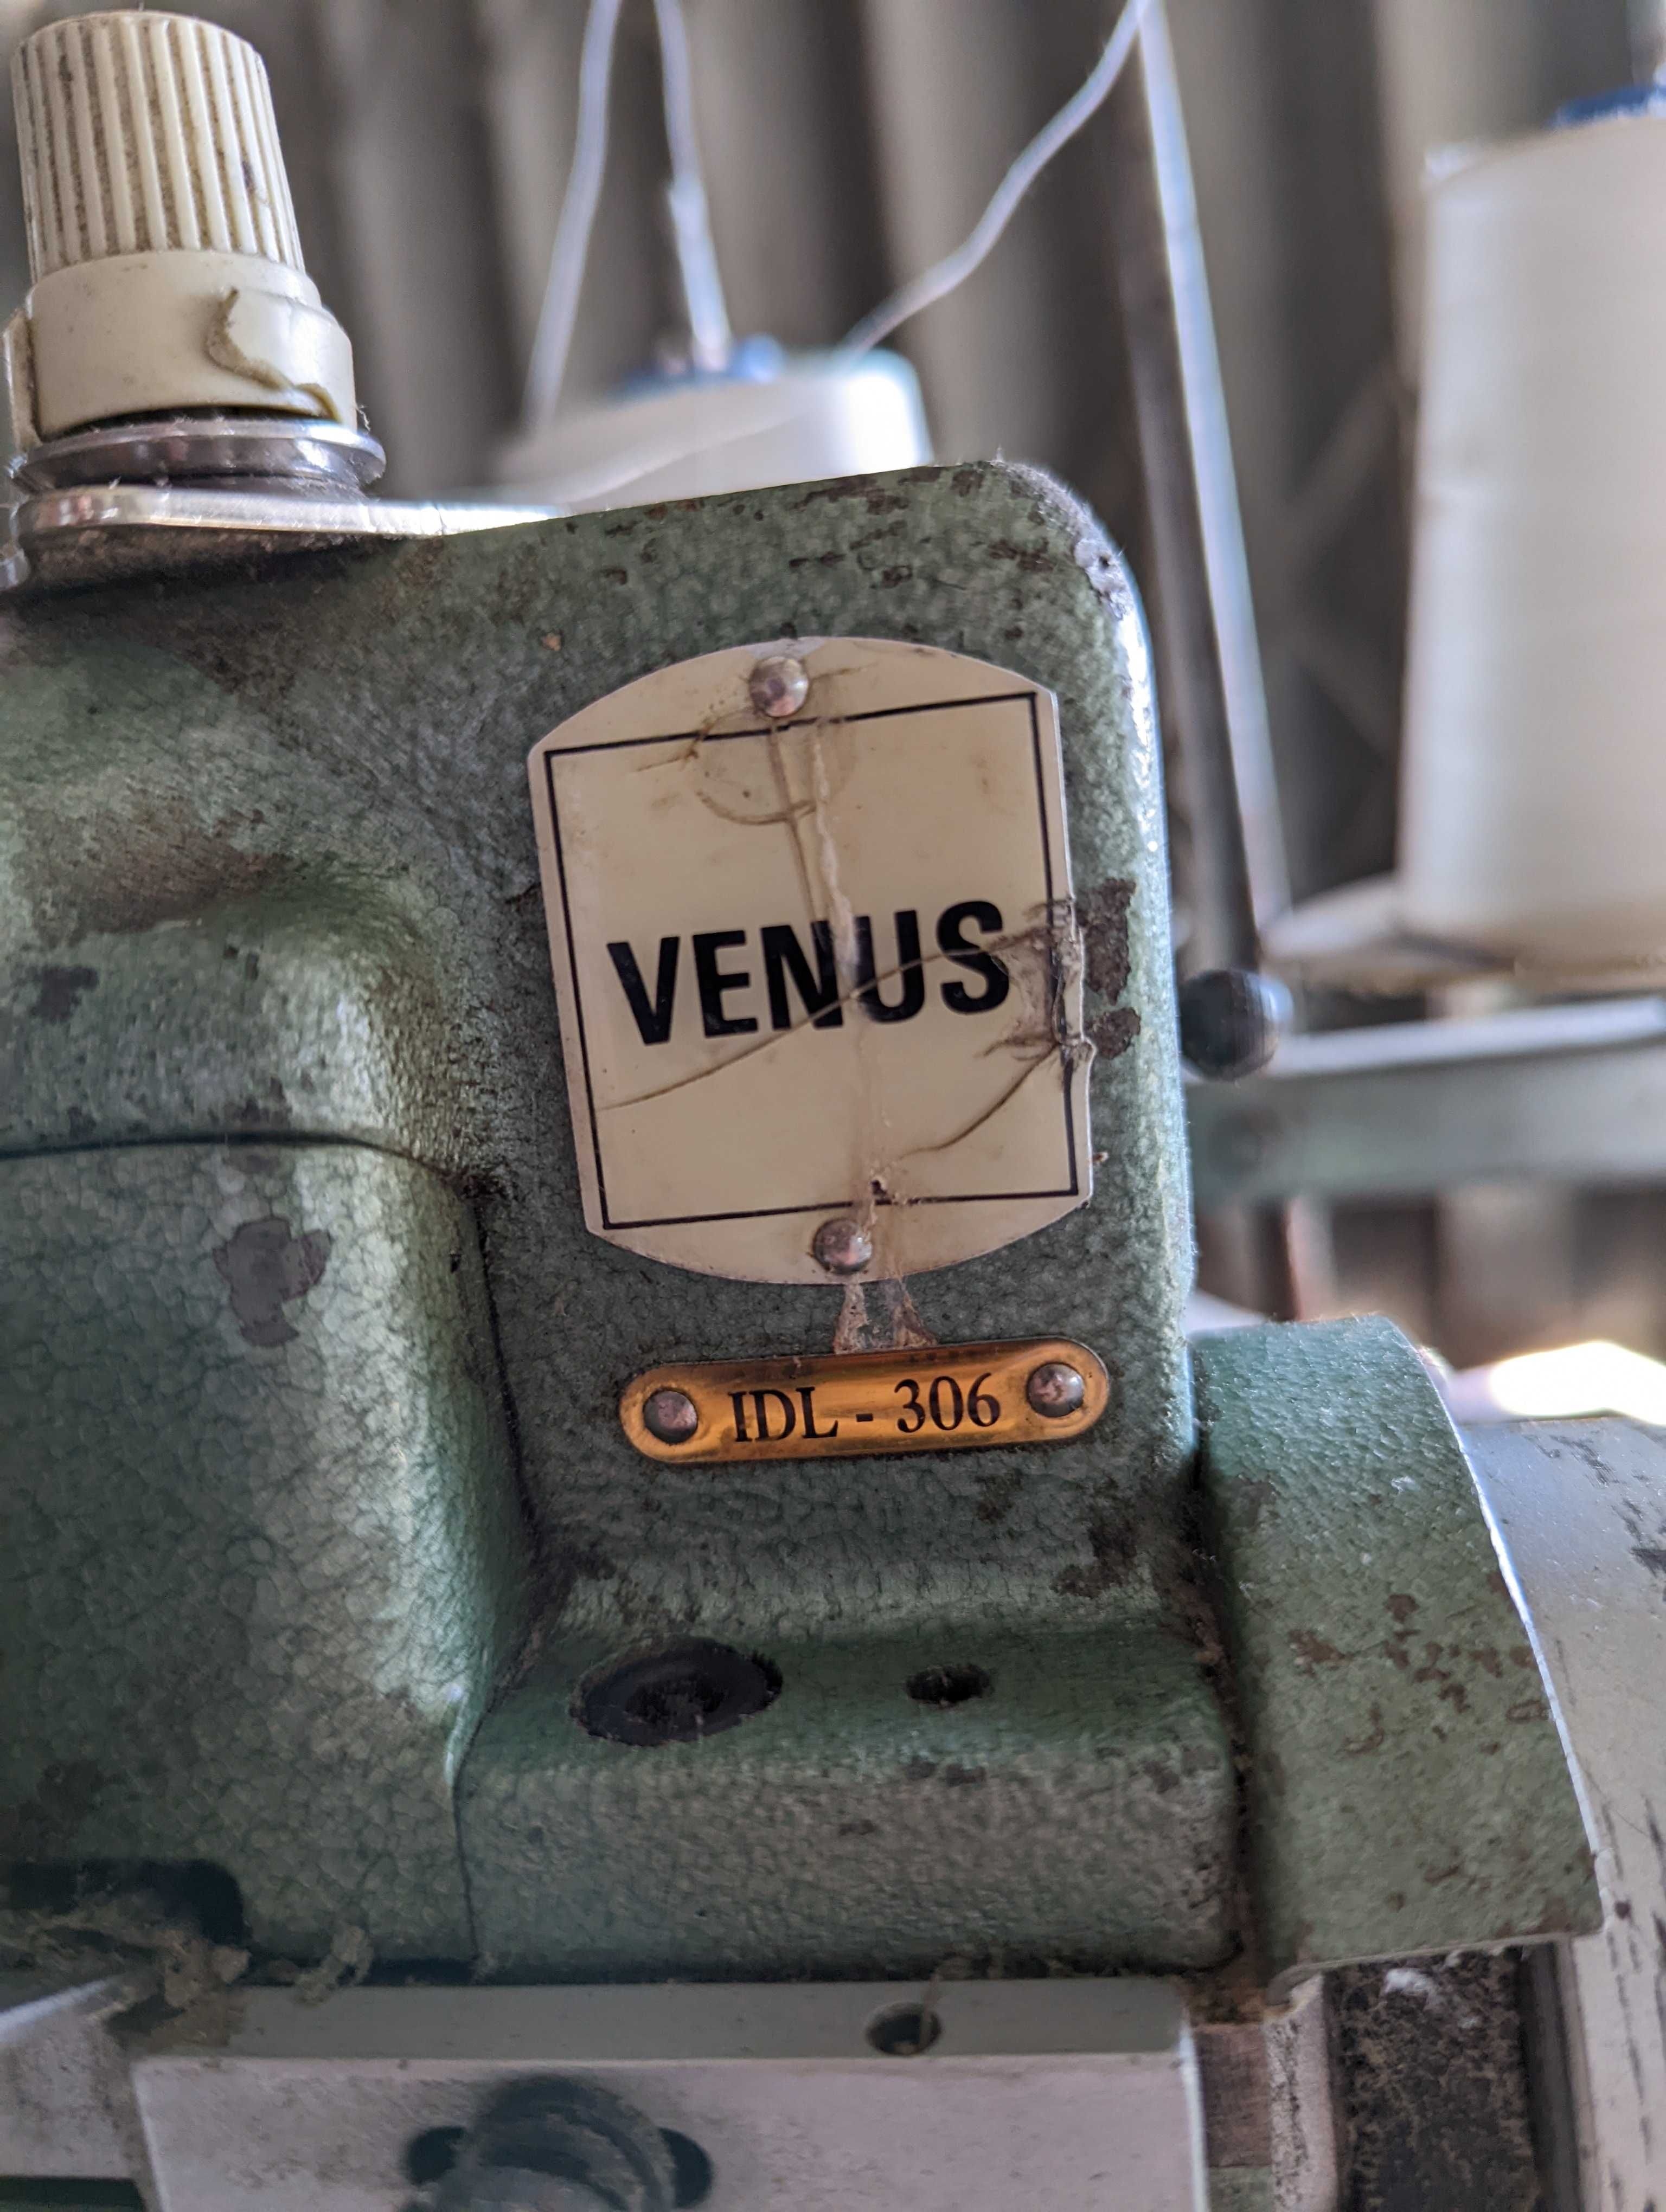 Máquina de Costura Venus, modelo IDL-306